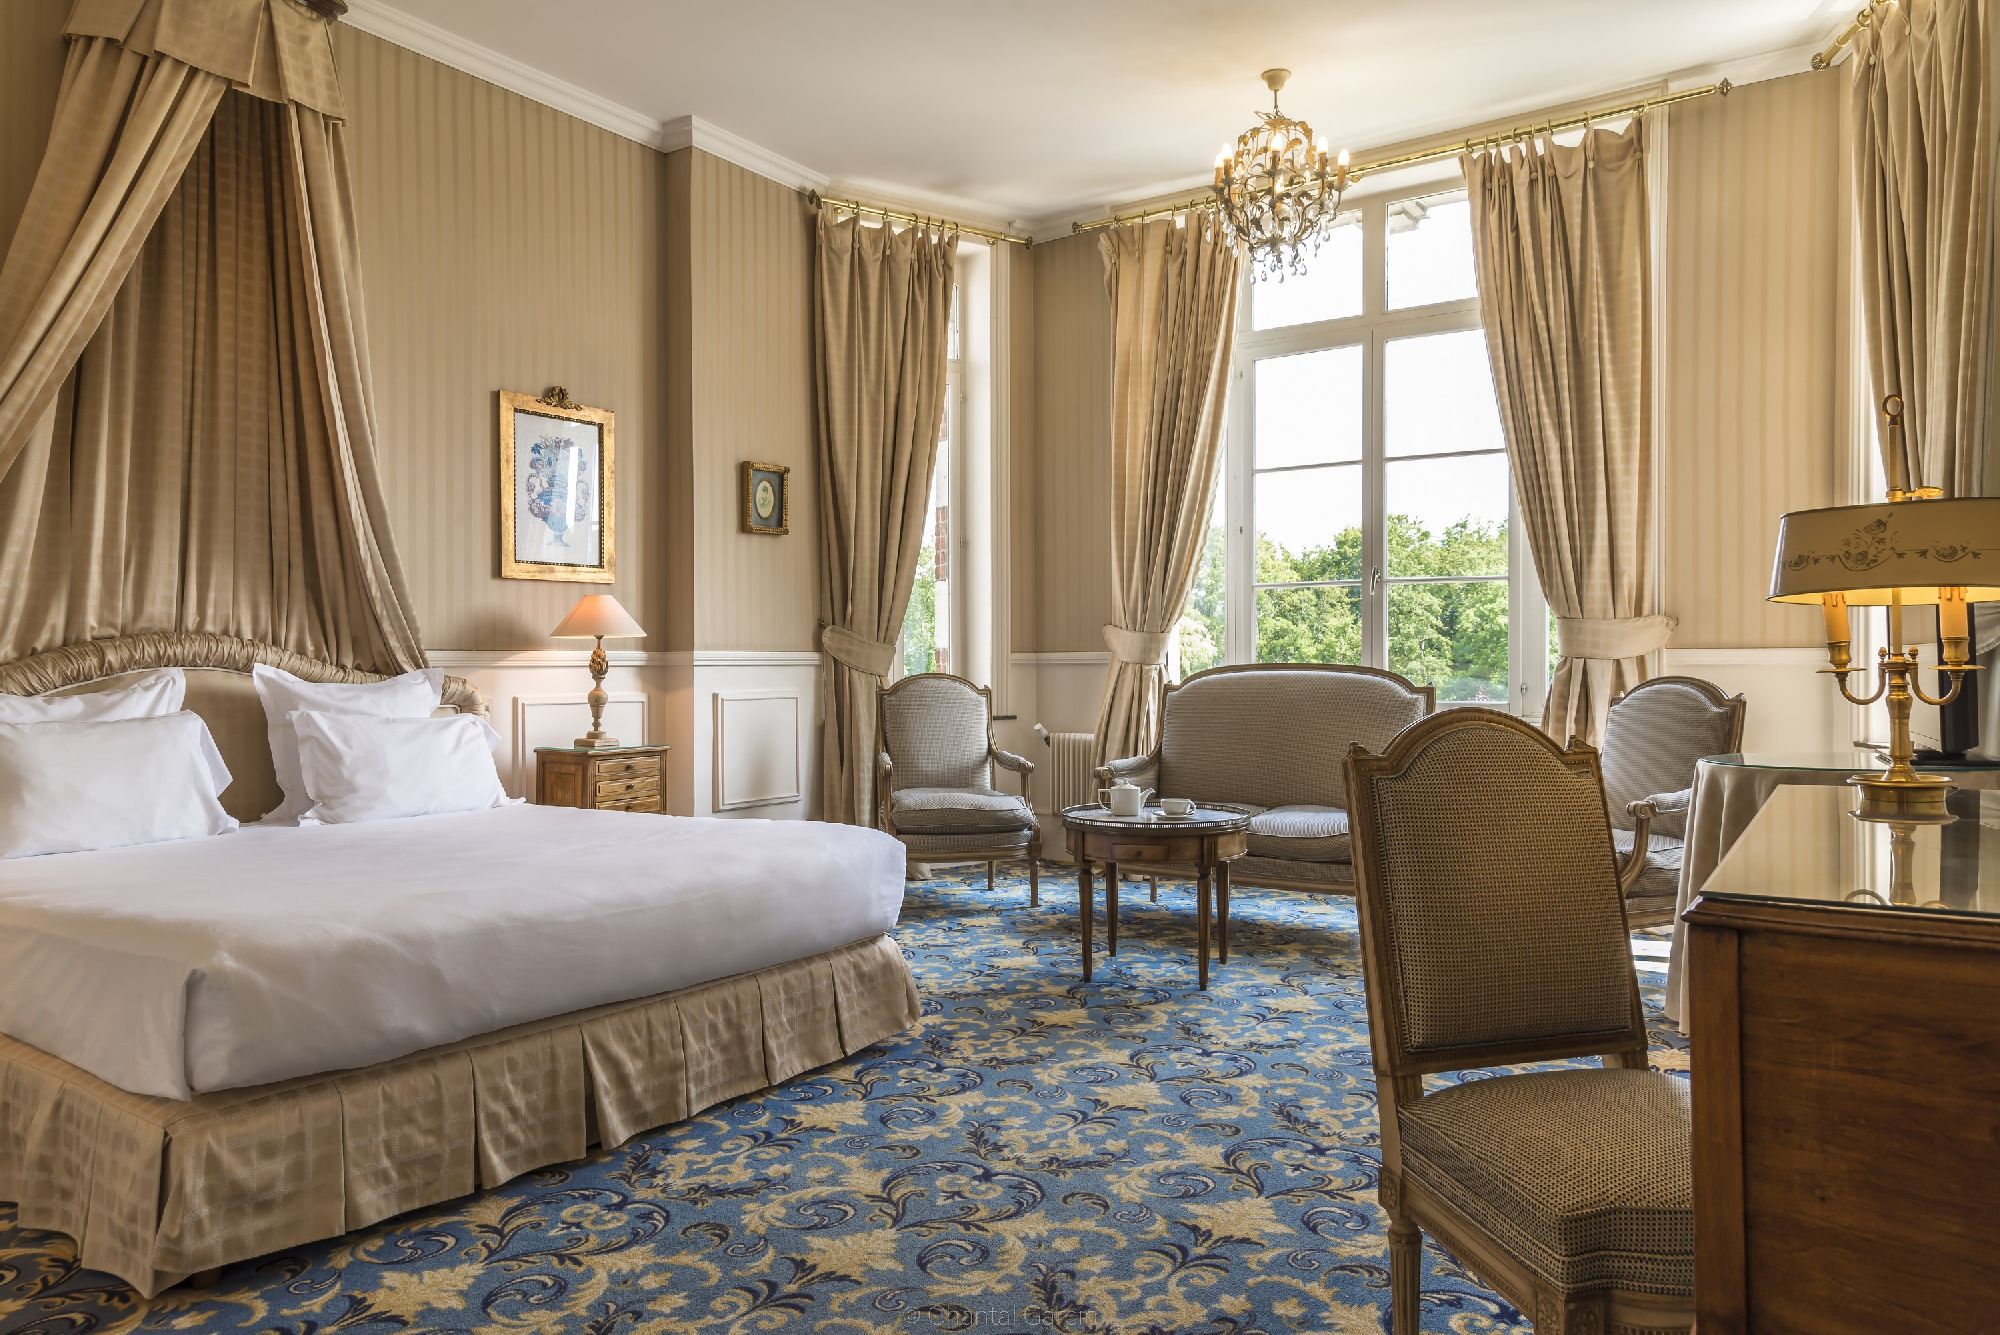 golf-expedition-golf-reizen-frankrijk-regio-pas-de-calais-chateau-tilques-slaapkamer-ingericht-met-klassieke-meubels.jpg